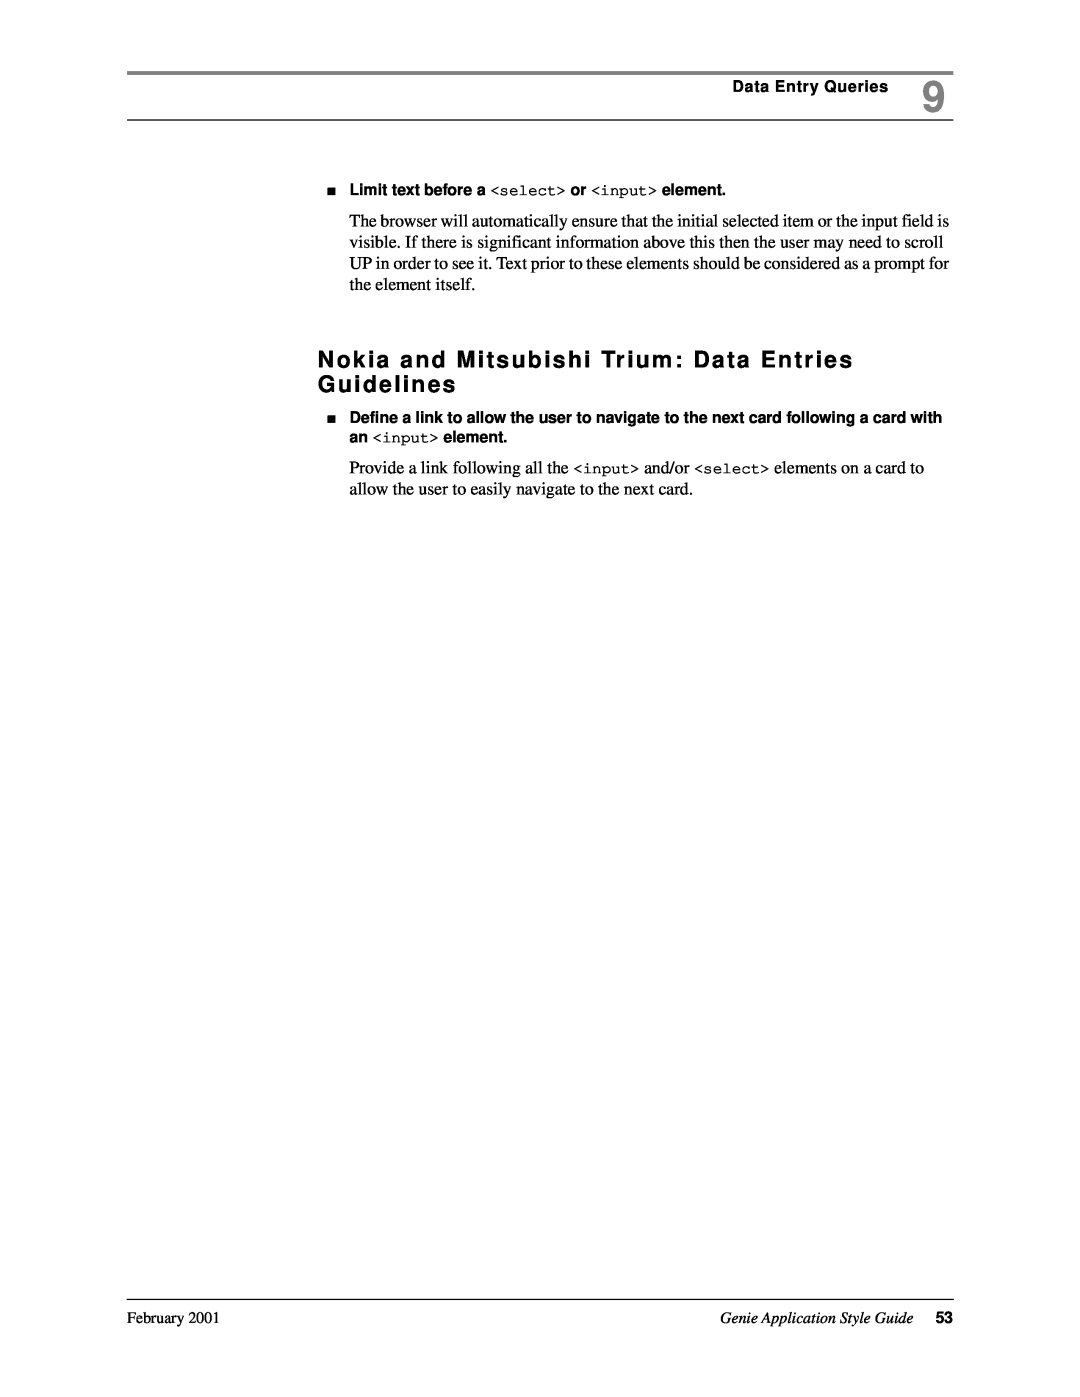 Genie 7110 manual Nokia and Mitsubishi Trium Data Entries Guidelines 